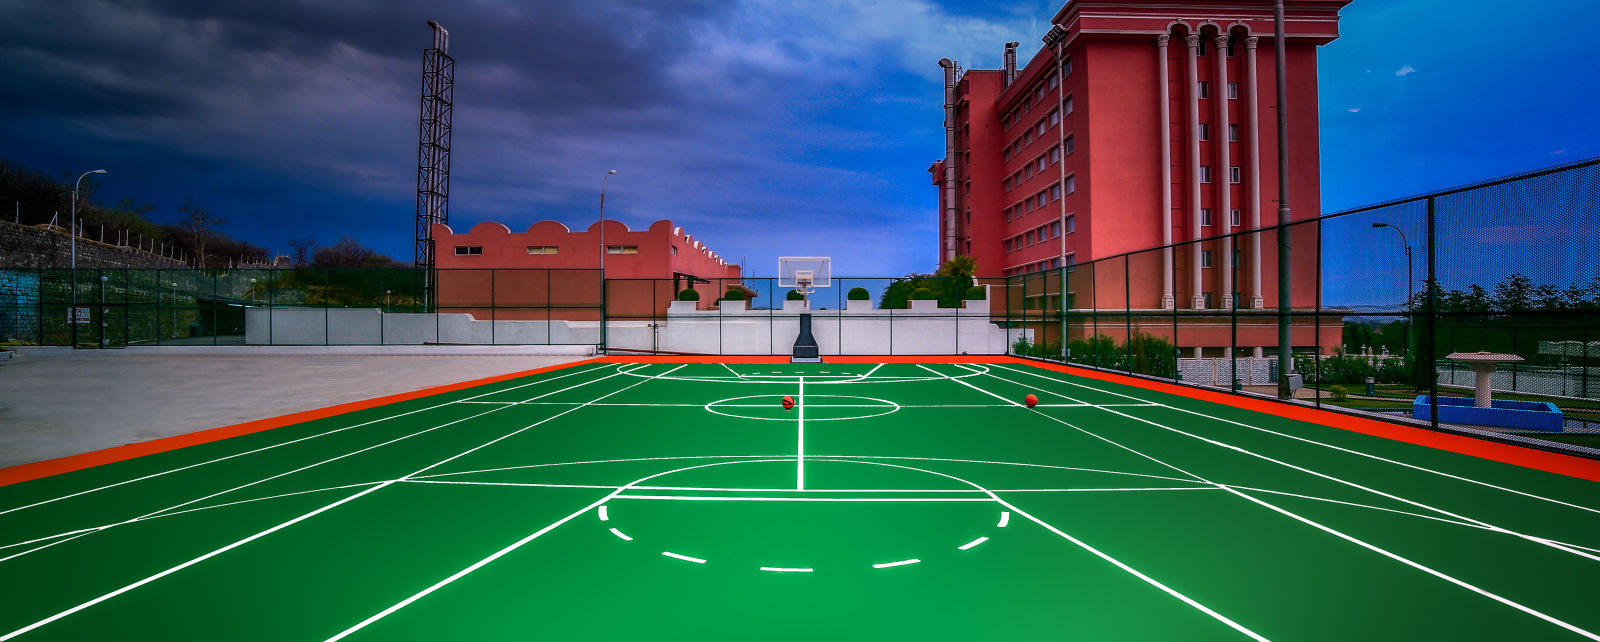 a shot the basketball court during dusk at Hotel Tara, Hyderabad